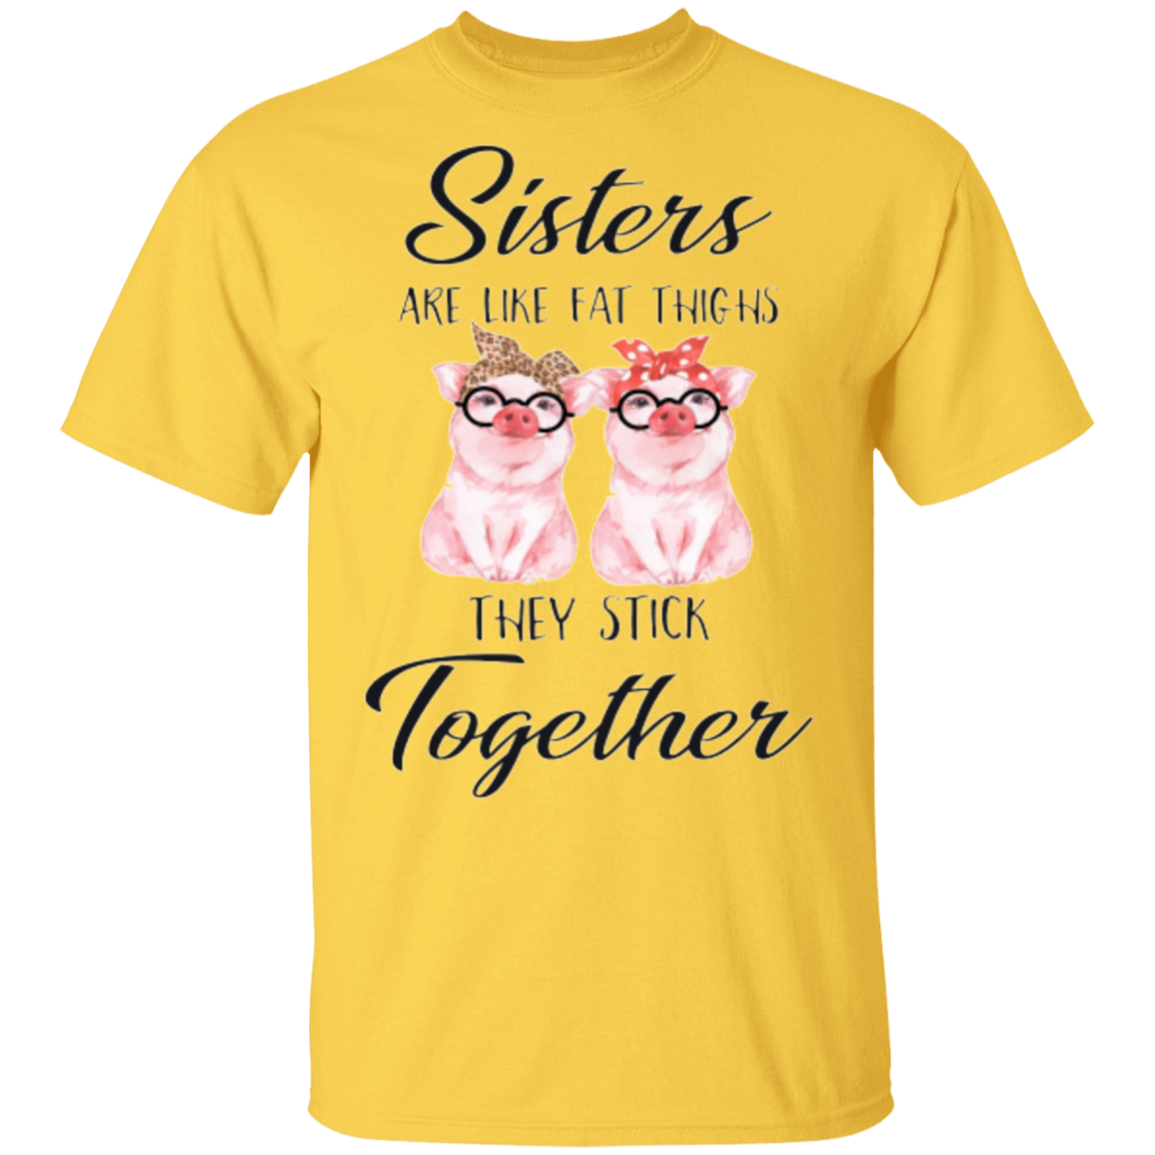 Sisters T-shirt